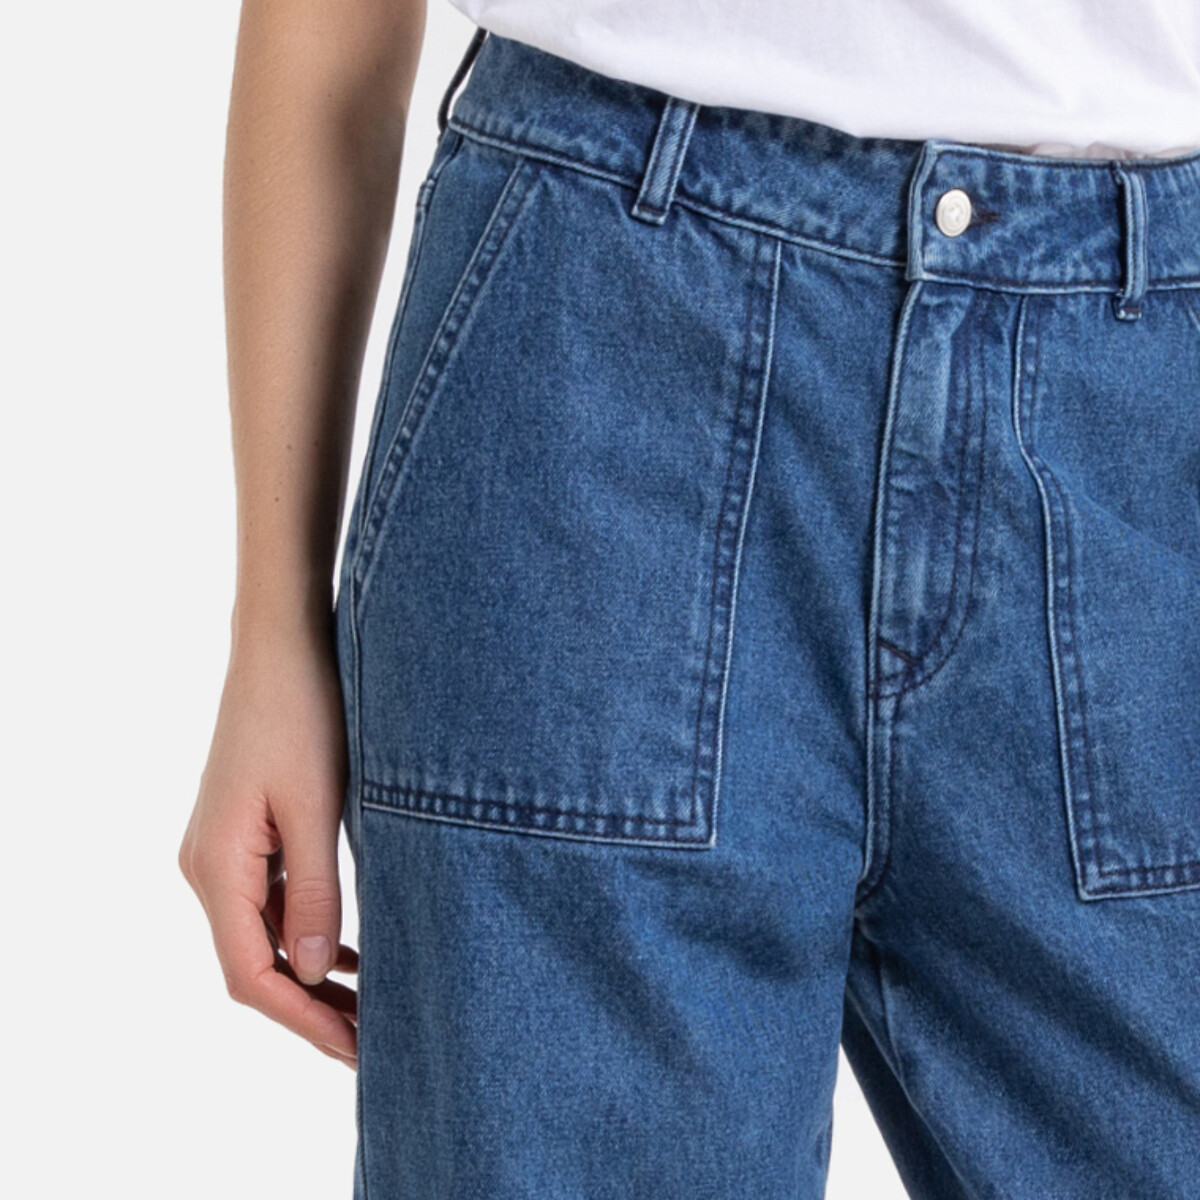 Что такое джинсы багги. La Redoute джинсы. Фасон багги джинсы. Синие багги джинсы. Джинсы бойфренды багги.